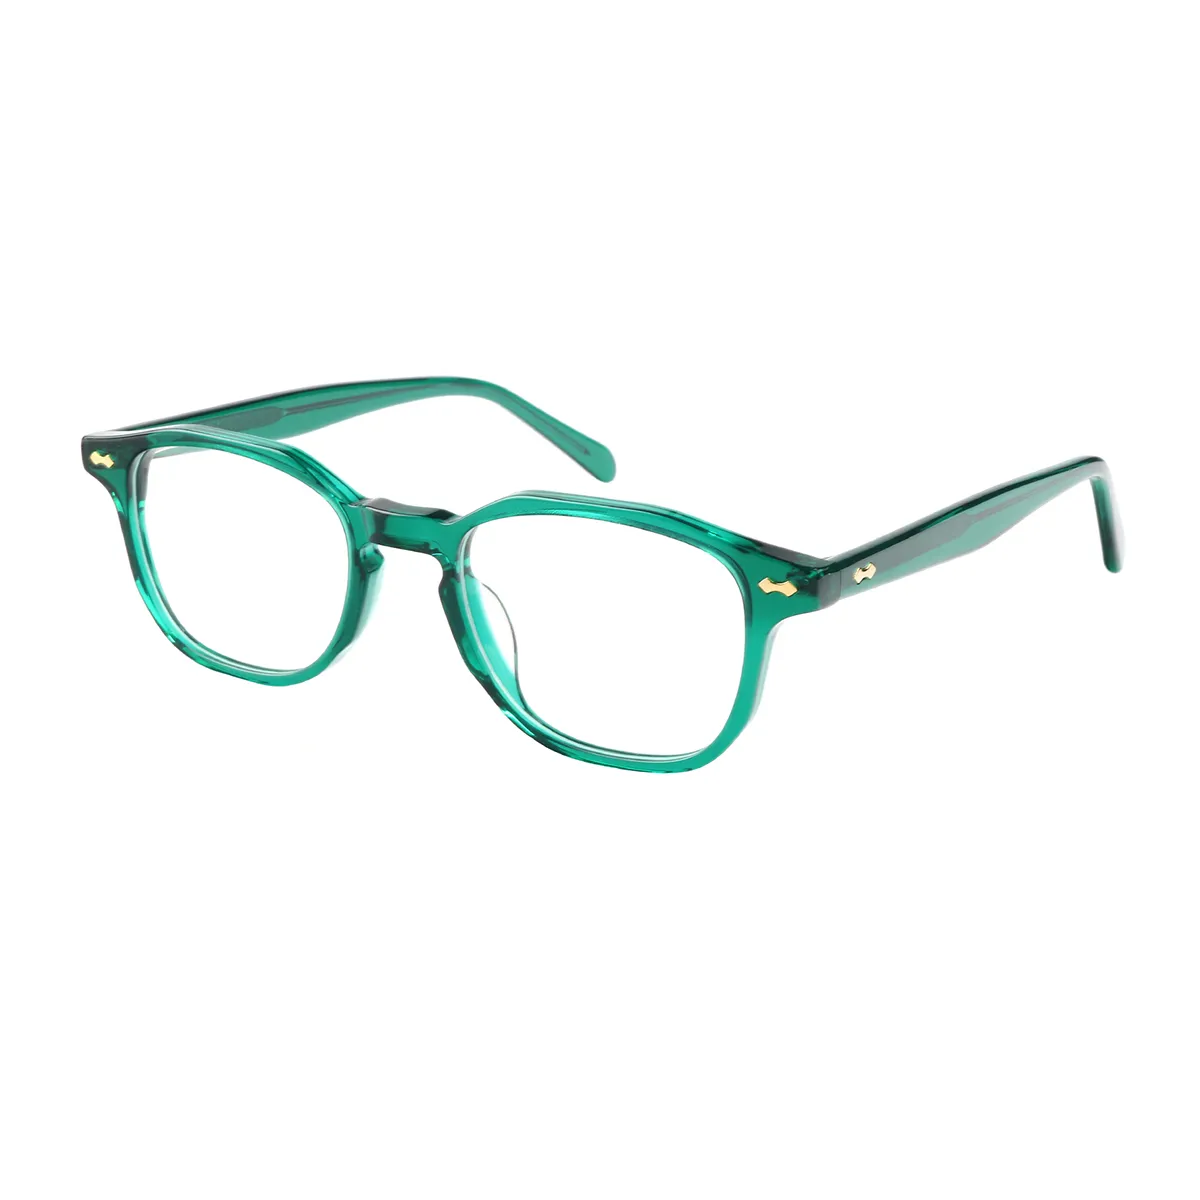 Allais - Square Green Glasses for Men & Women